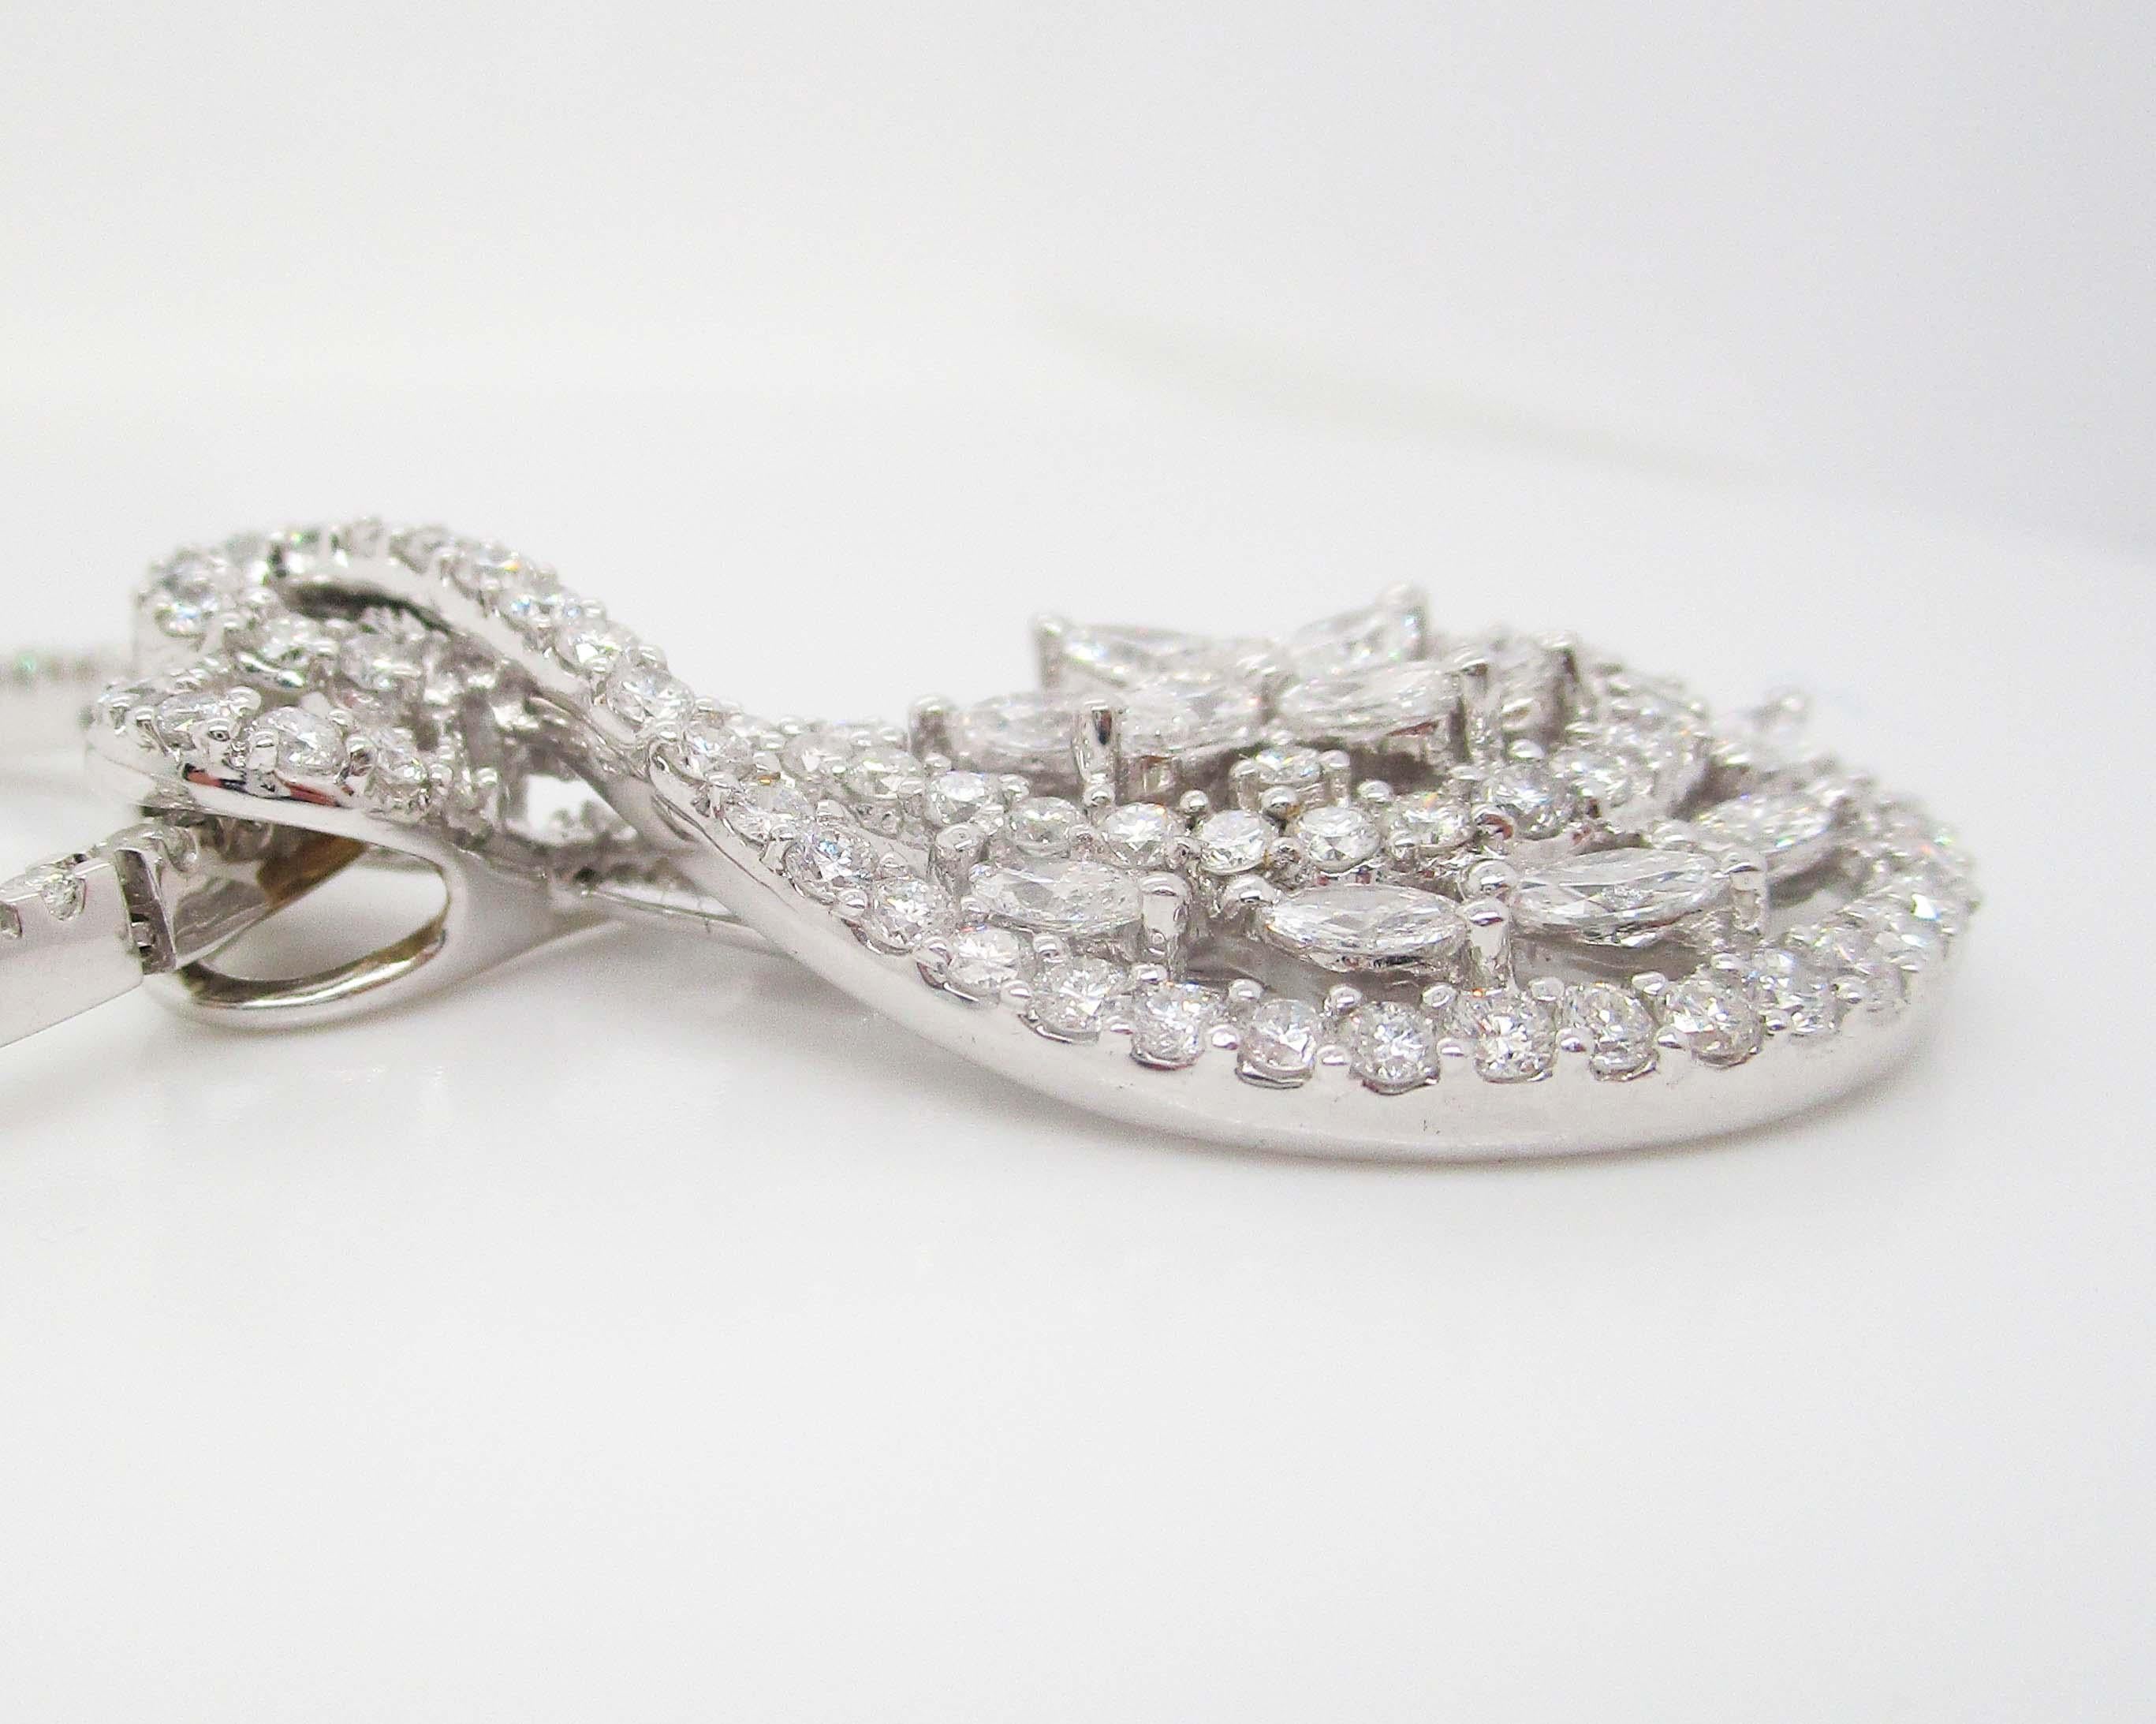 18 Karat Gold Diamond Necklace with Removable 18 Karat Diamond Teardrop Pendant For Sale 1